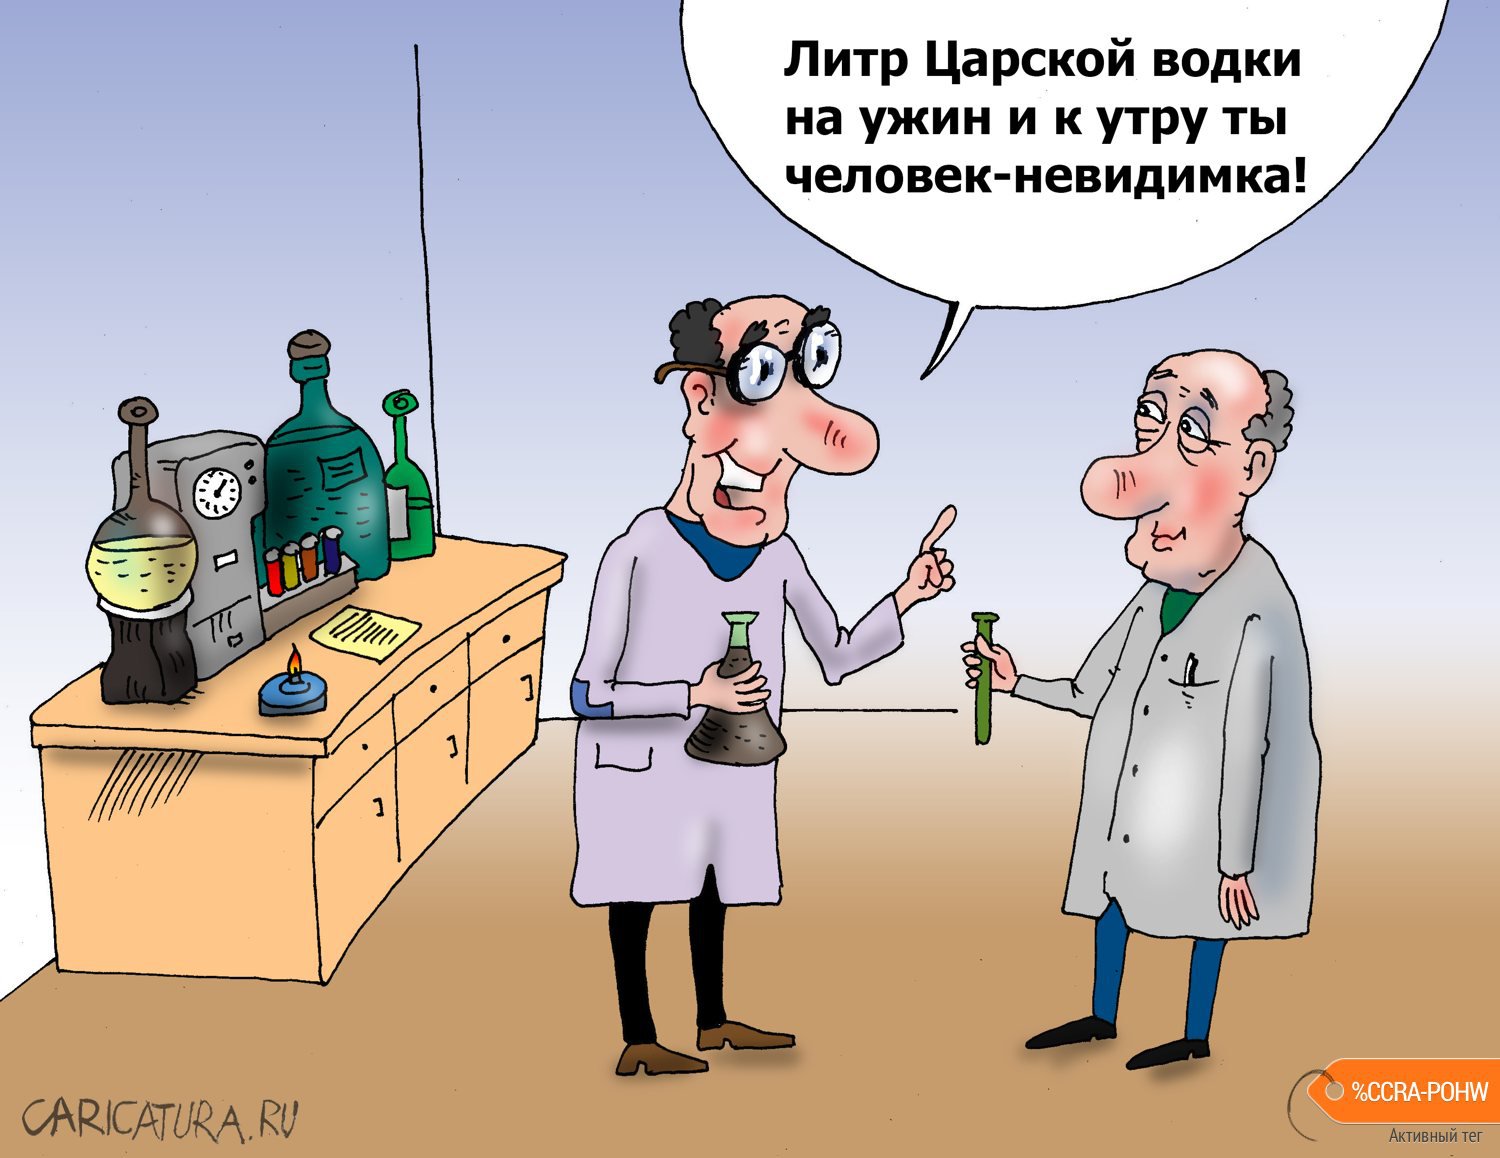 Карикатура "Царская водка", Валерий Тарасенко